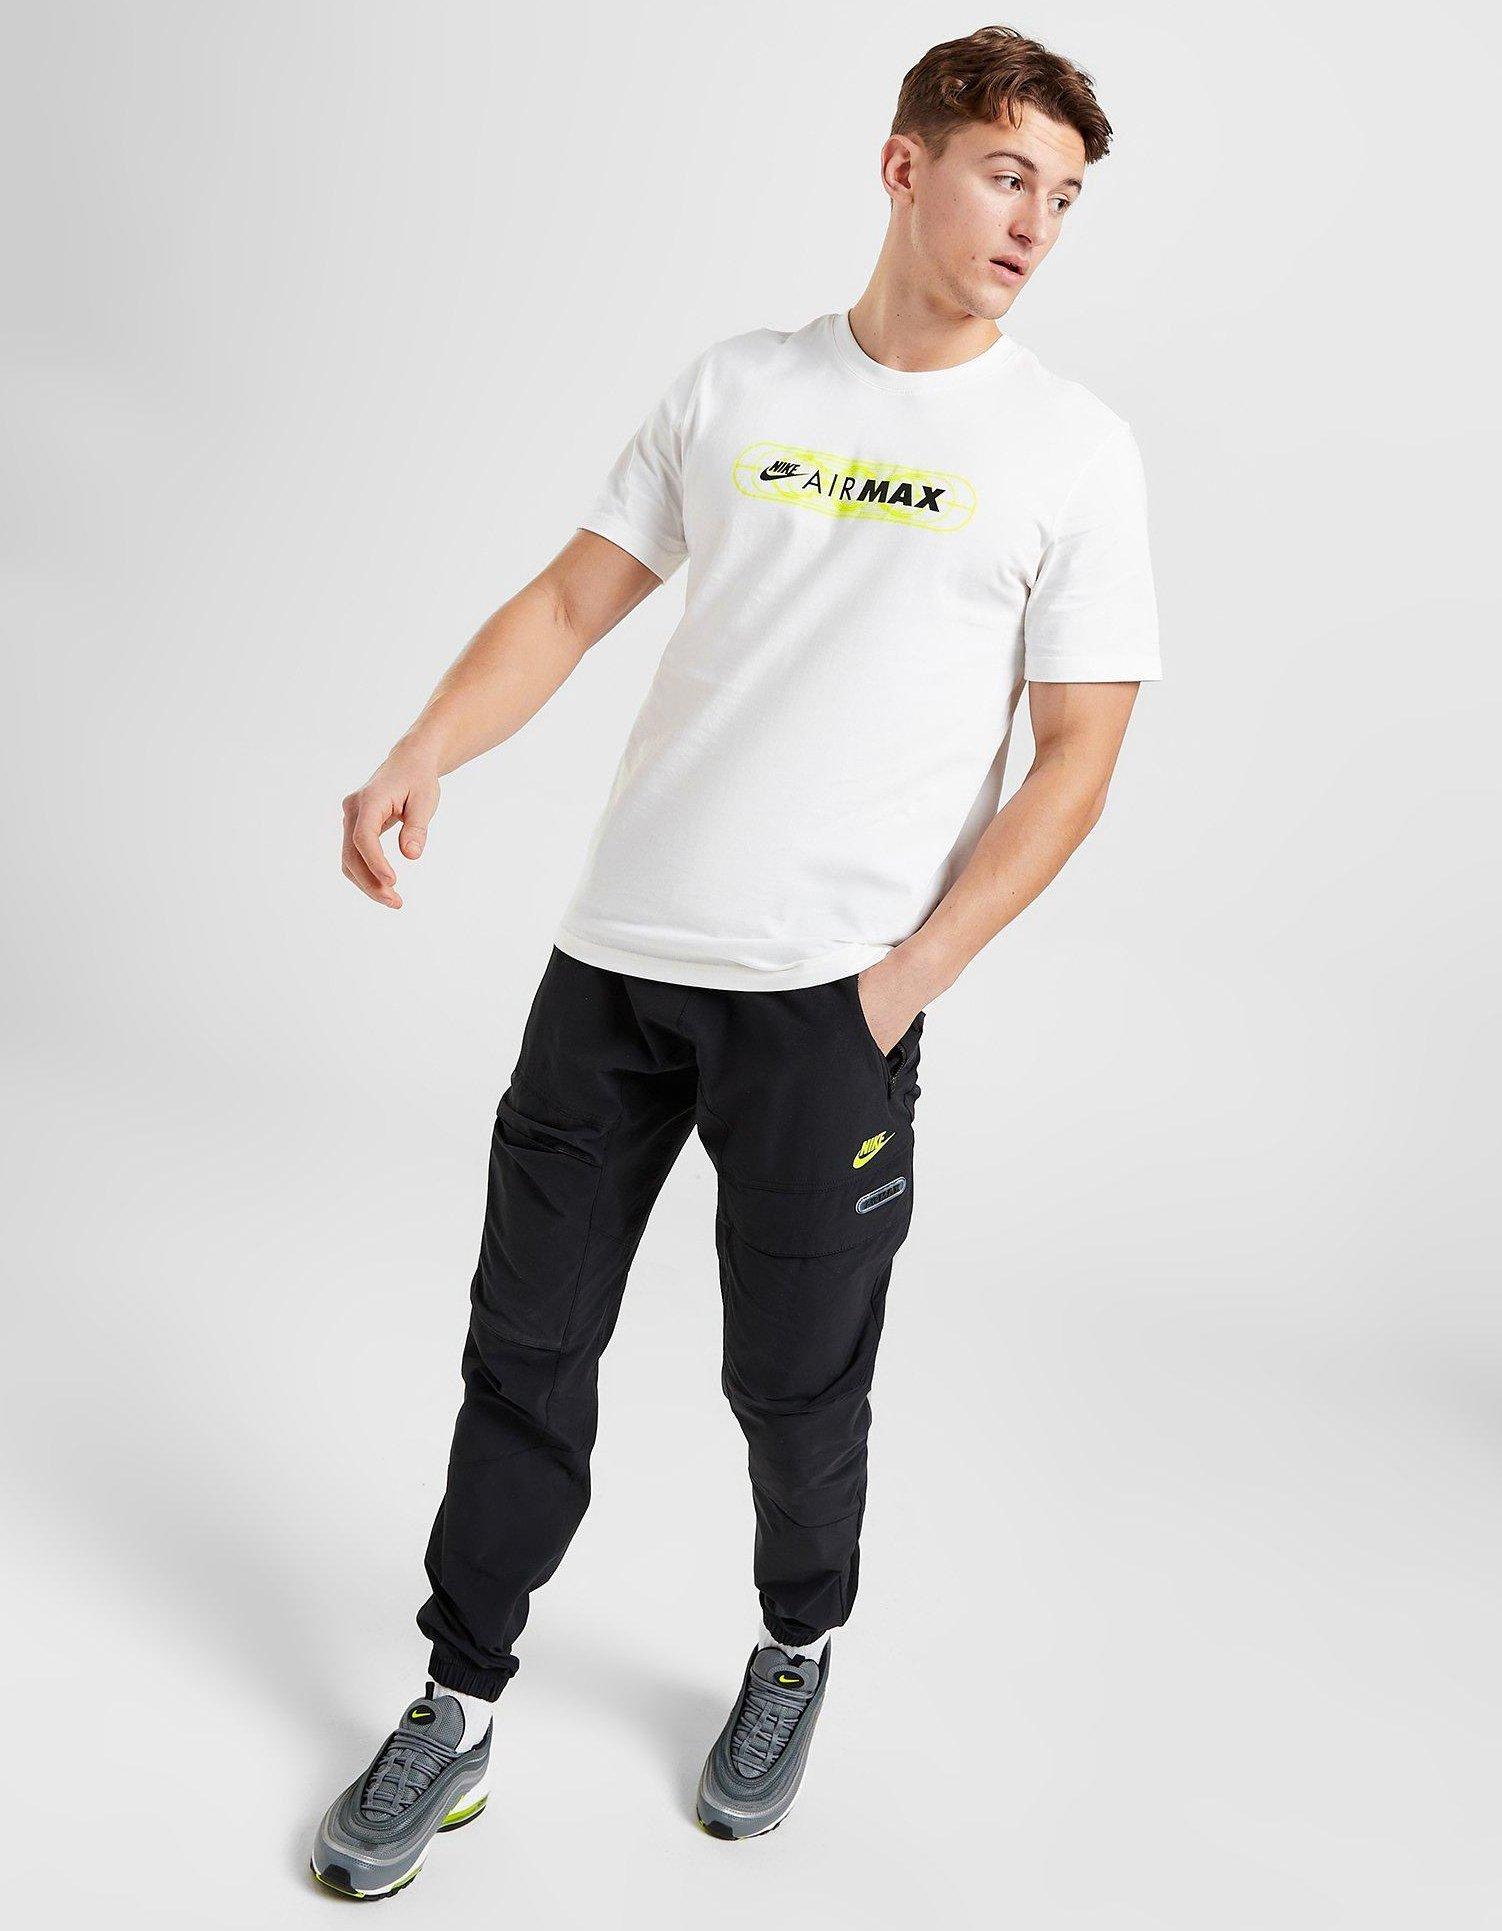 en person i vit Nike AM t-shirt